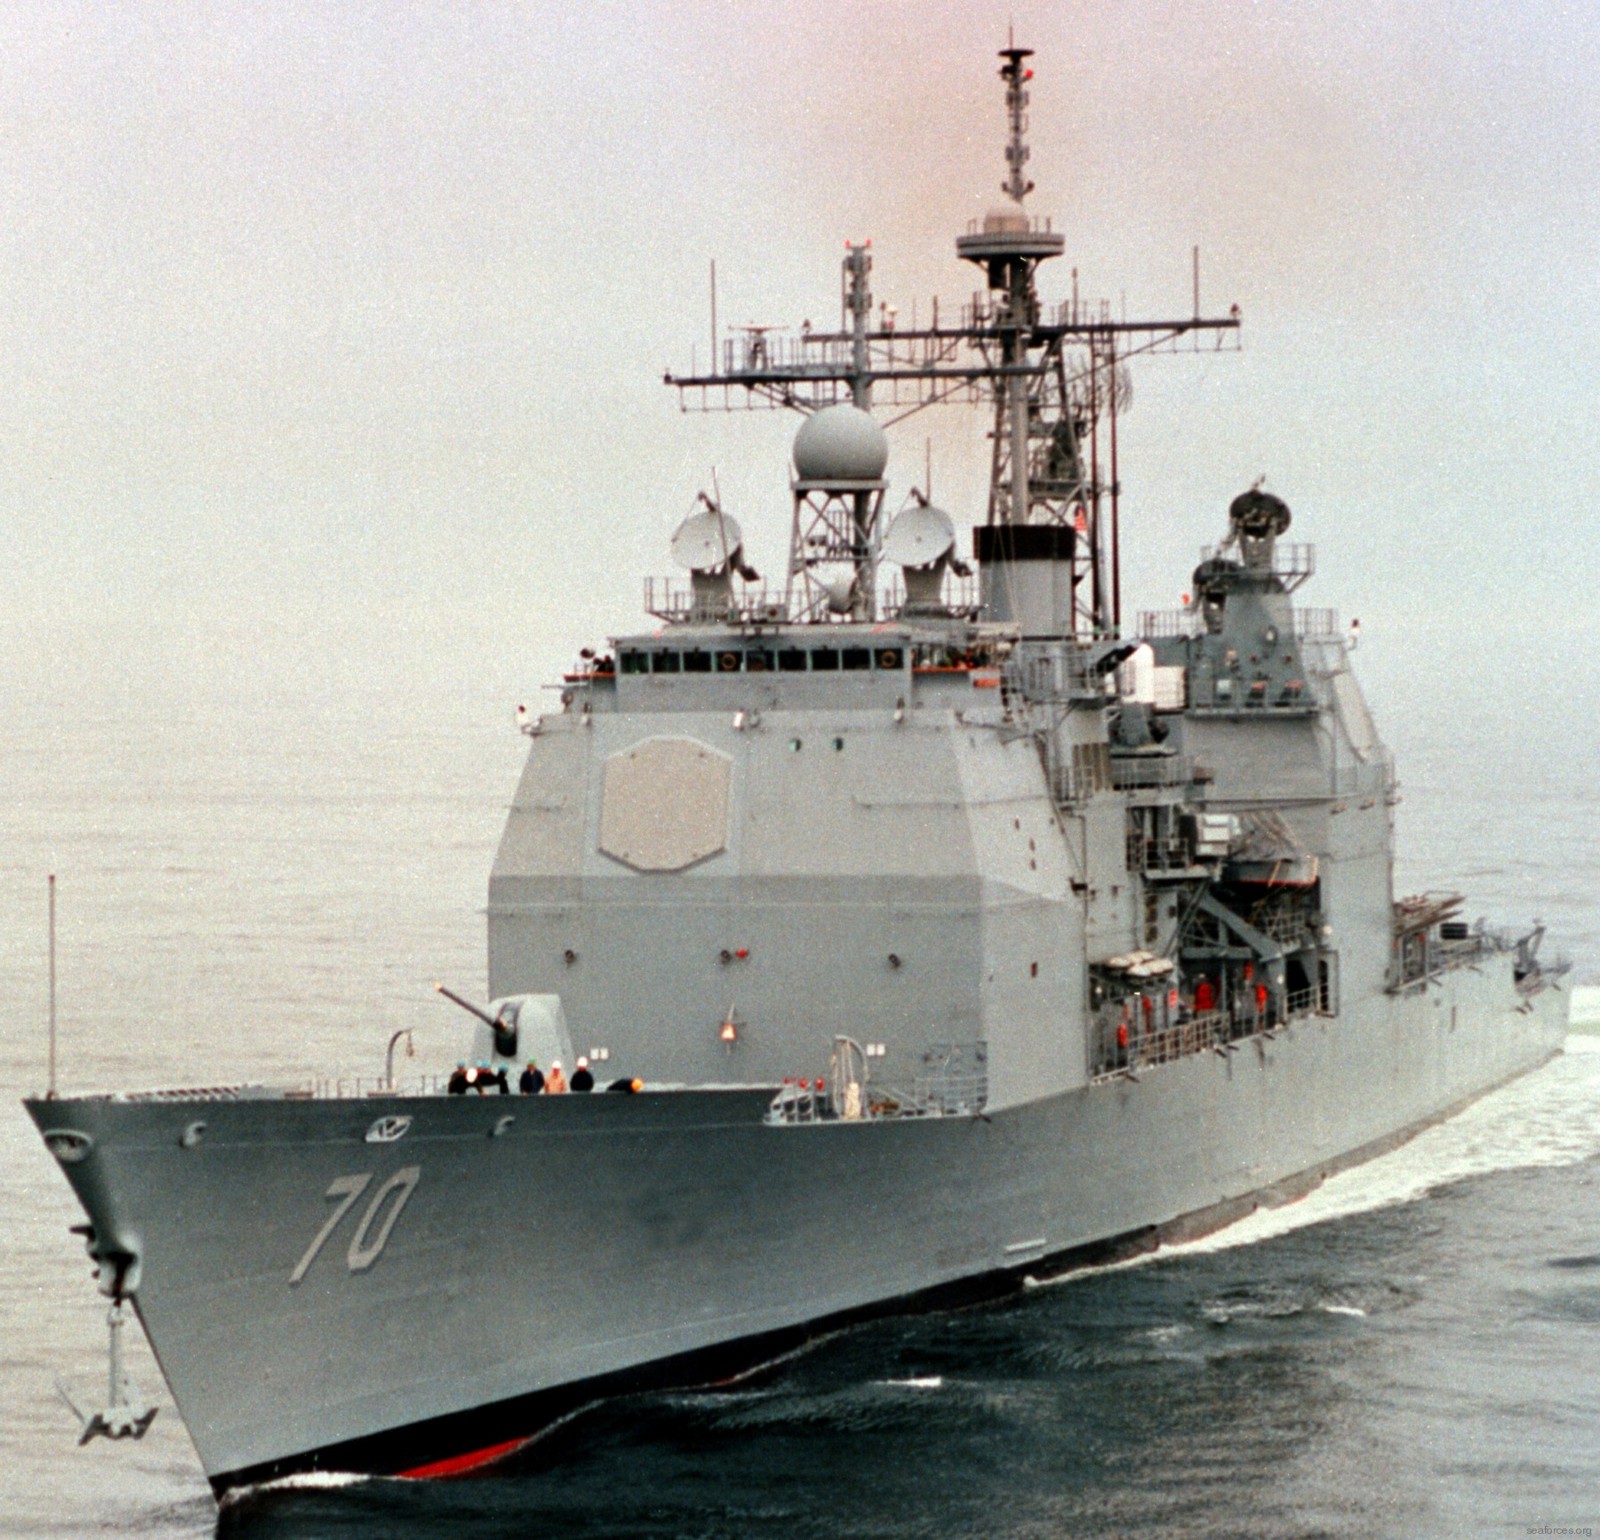 cg-70 uss lake erie ticonderoga class guided missile cruiser navy 74